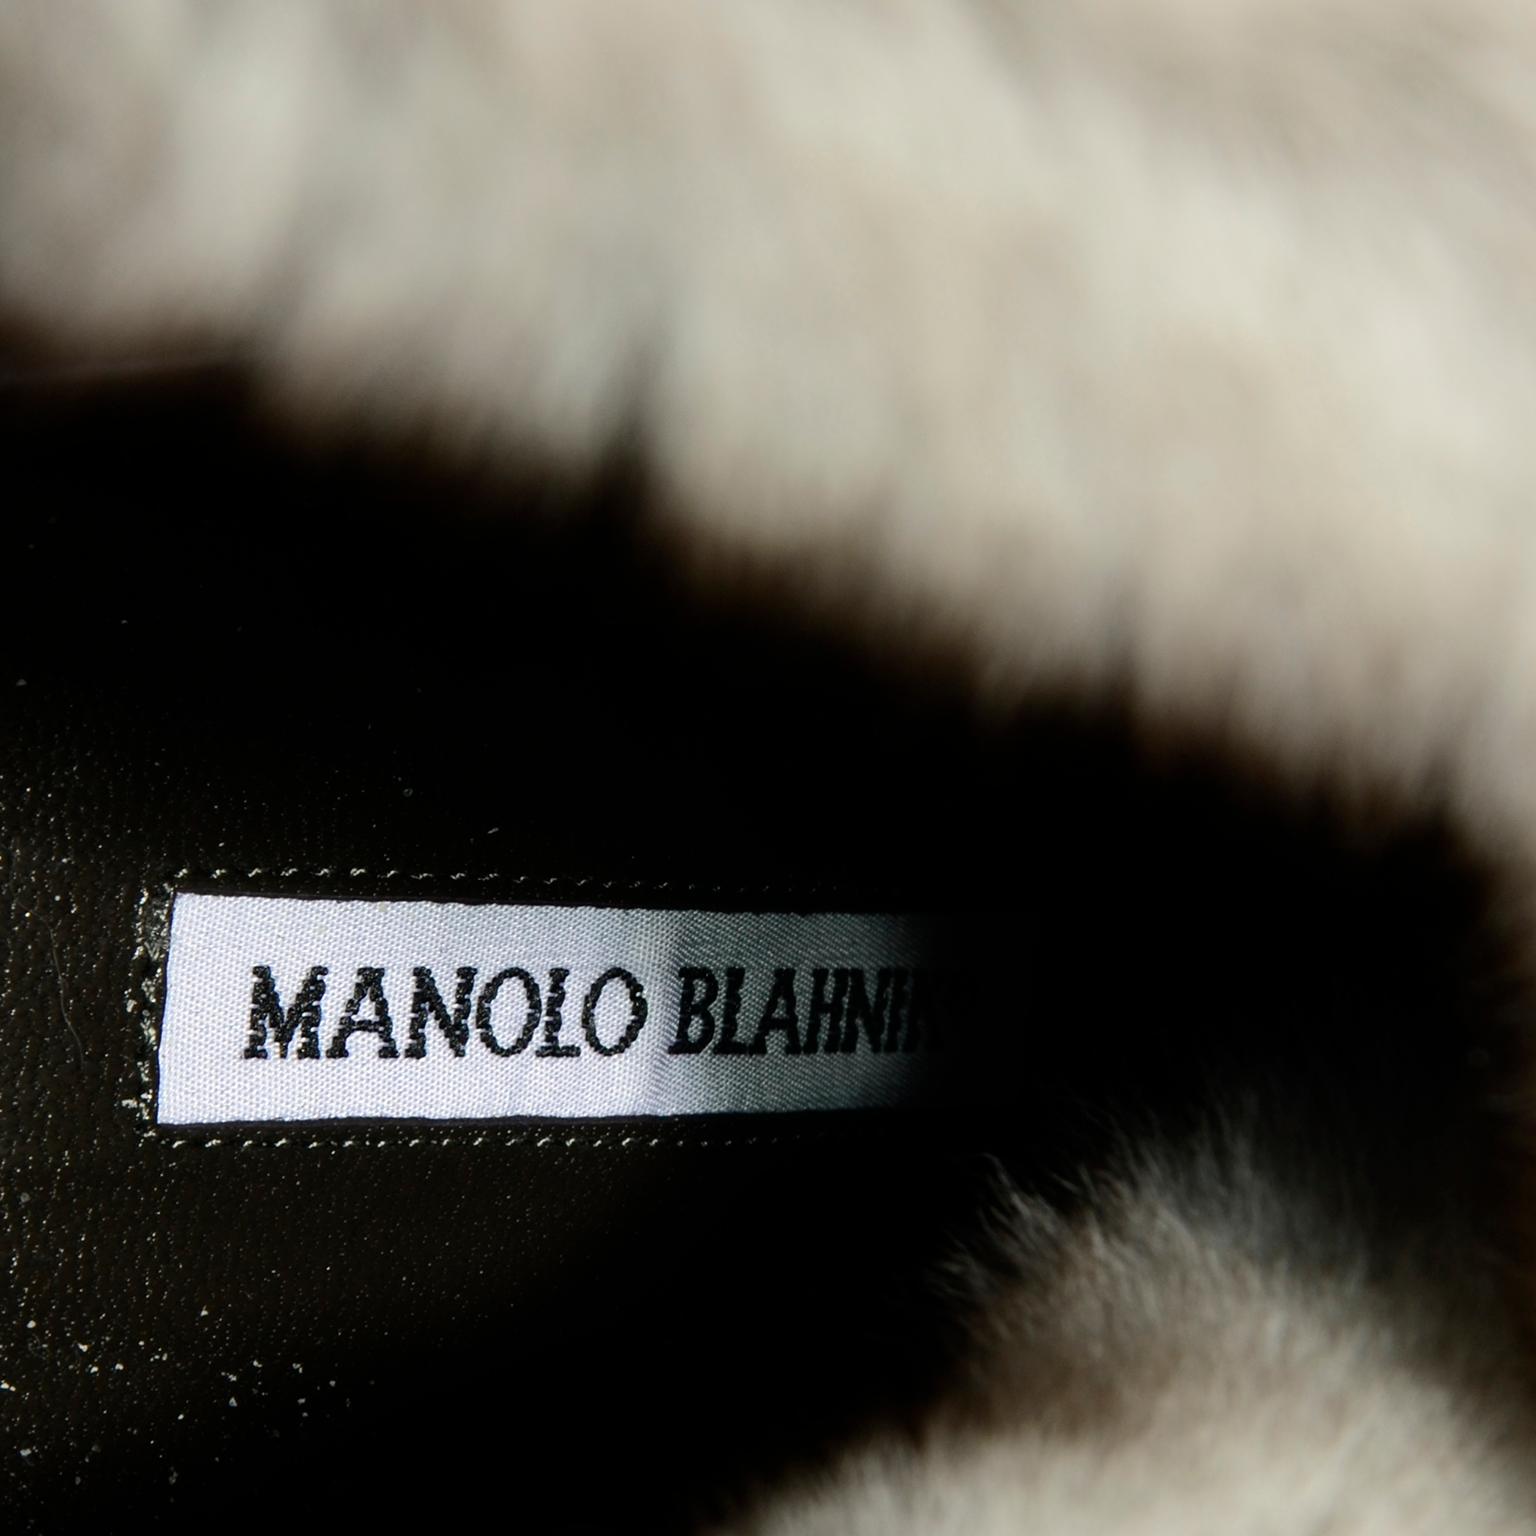  Manolo Blahnik Black Suede Booties W Heels & Luxe Mink Trim w Box & Shoe Bags 4